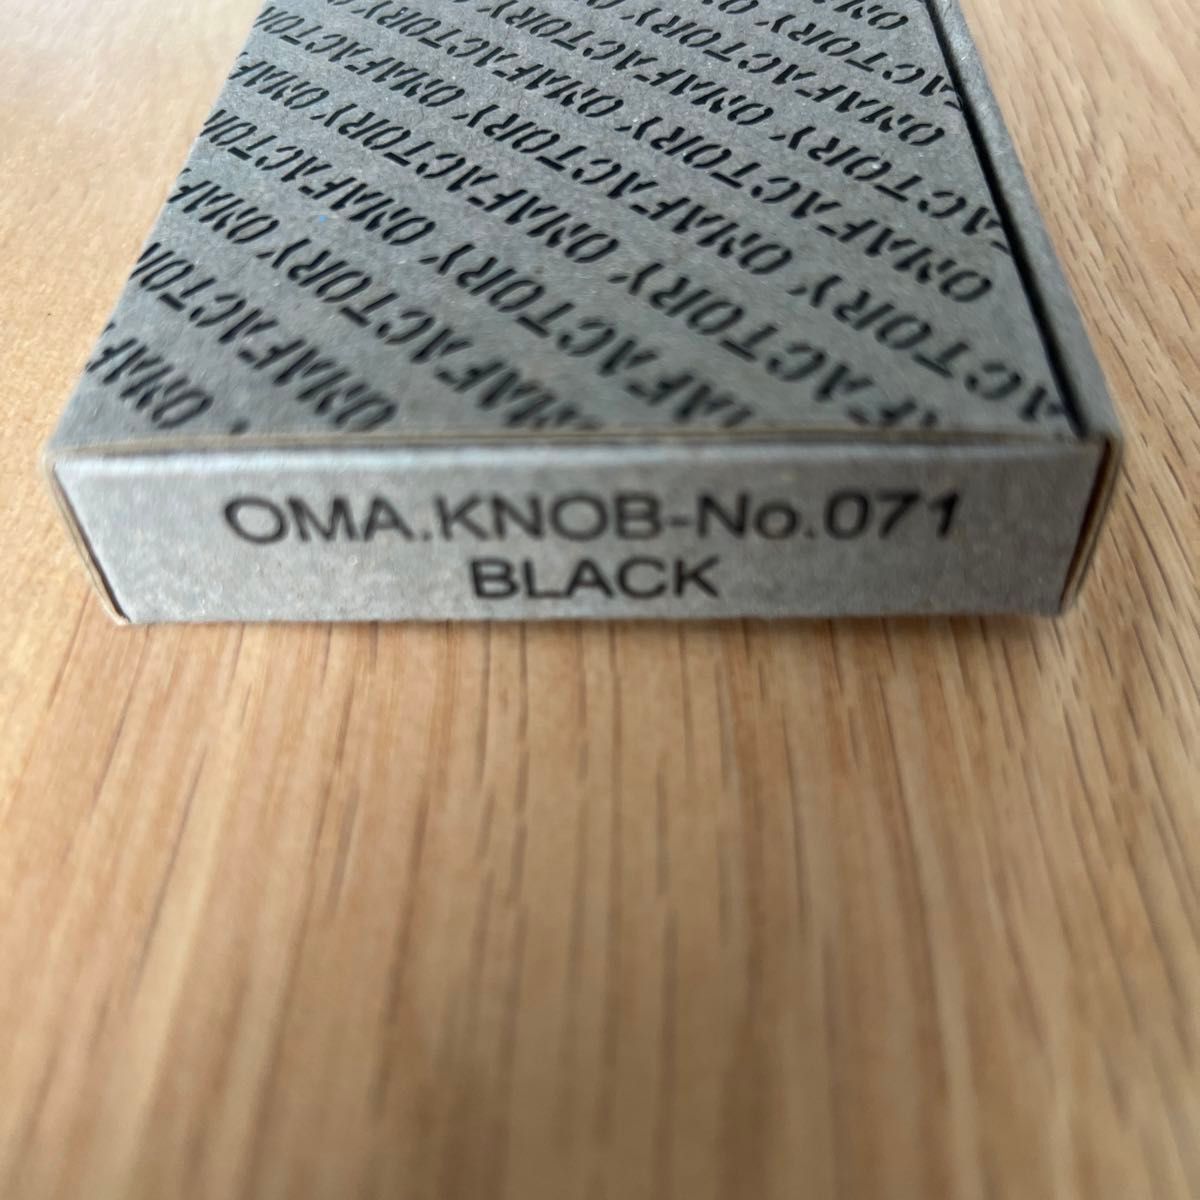 OMA FACTORY OMA.KNOB-No.071 BLACK